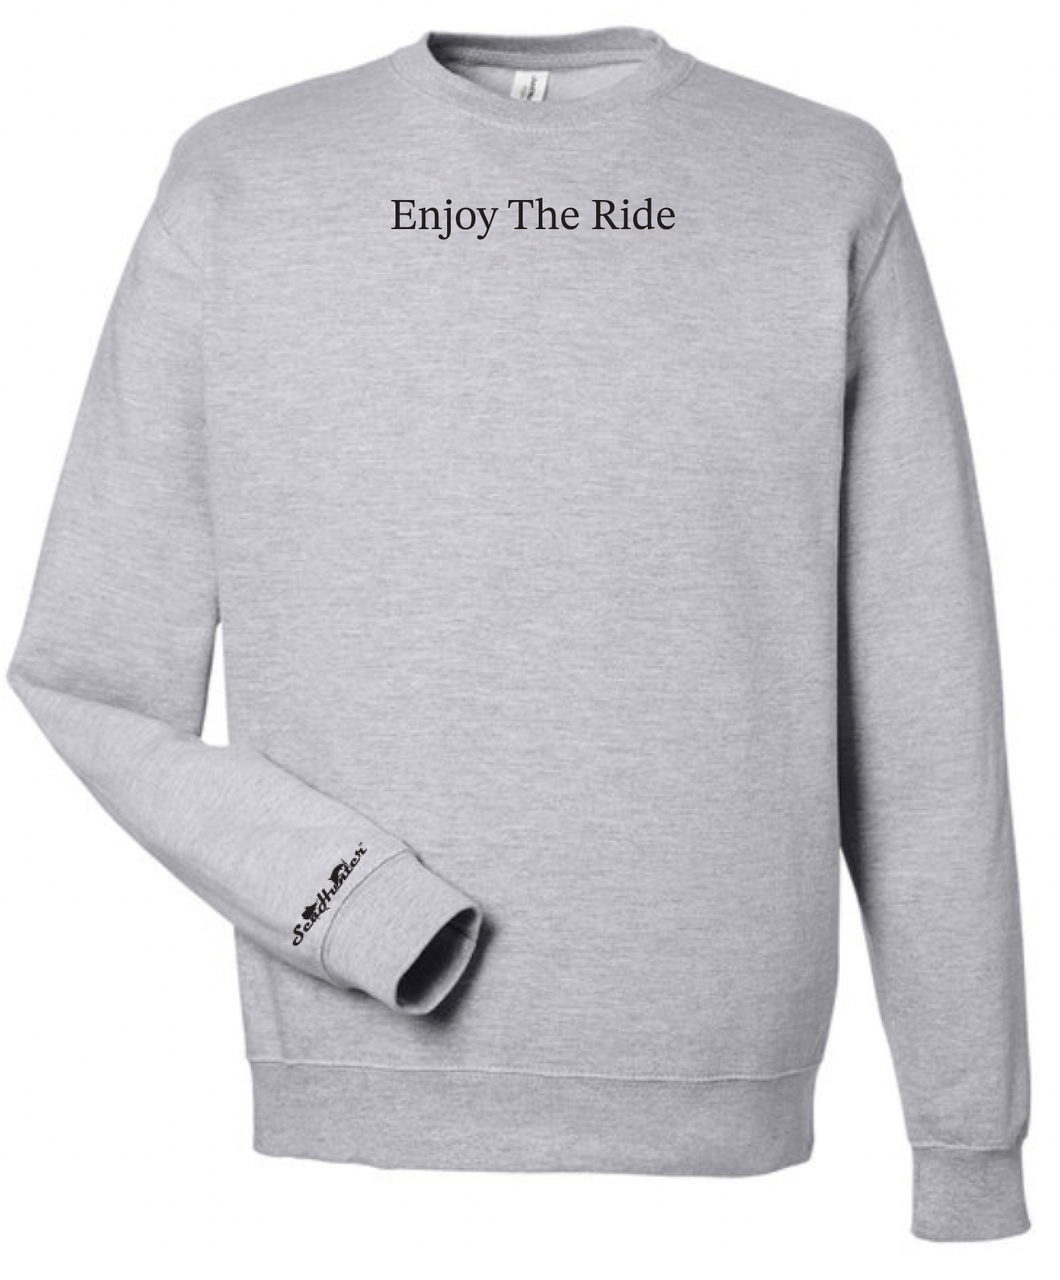 Enjoy The Ride Crewneck Sweater